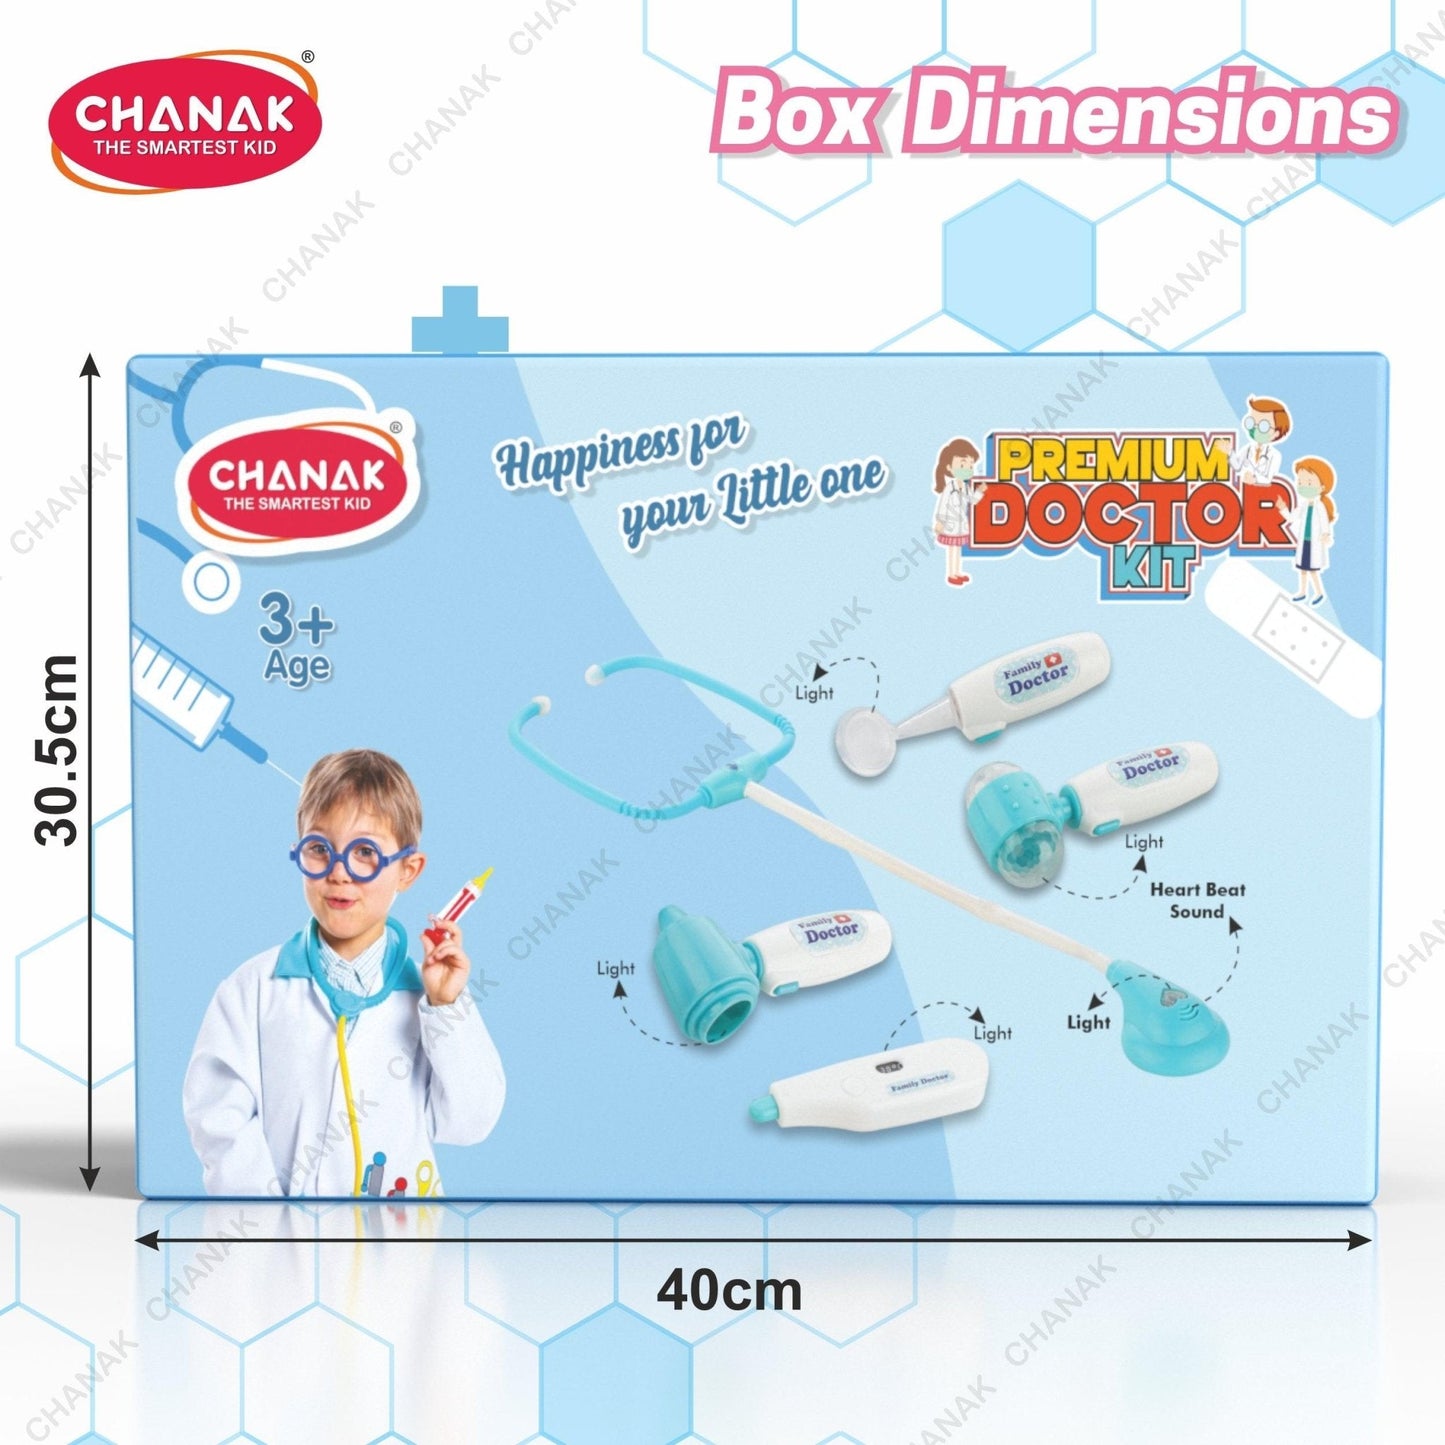 Chanak Premium Doctor Set for Kids - 10 Piece (Pink) - chanak